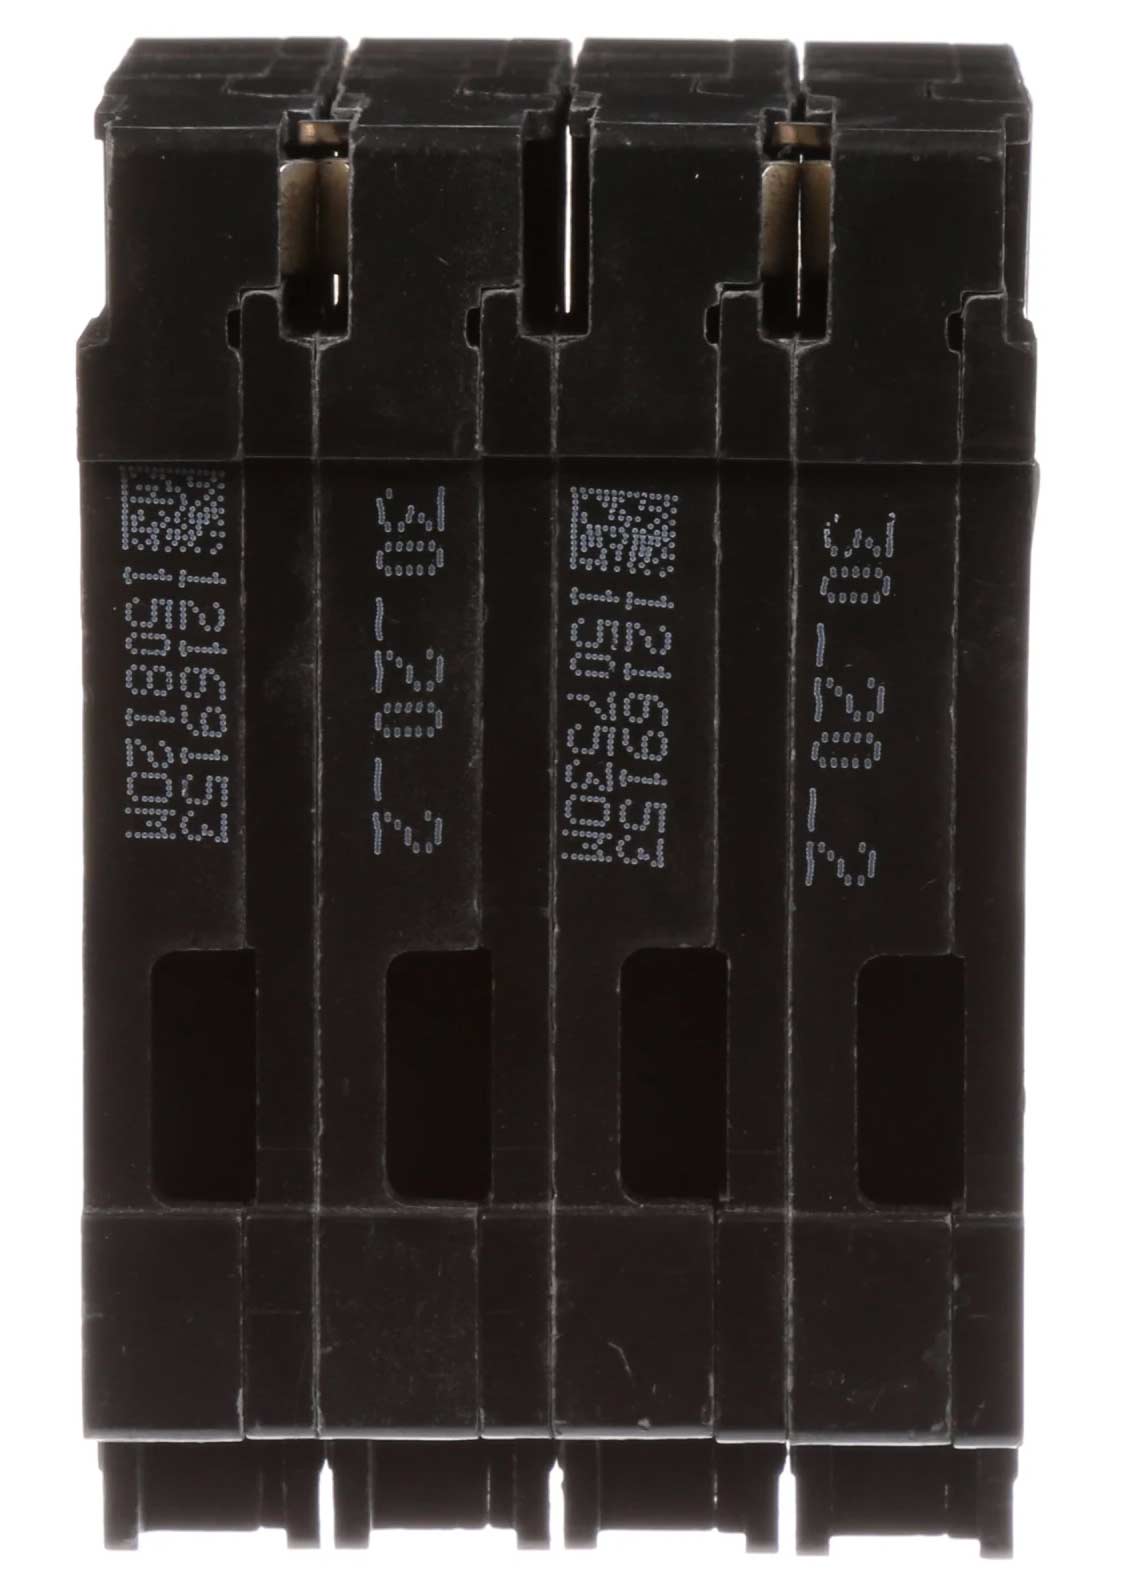 Q23020CT2 - Siemens - 30 Amp Molded Case Circuit Breaker